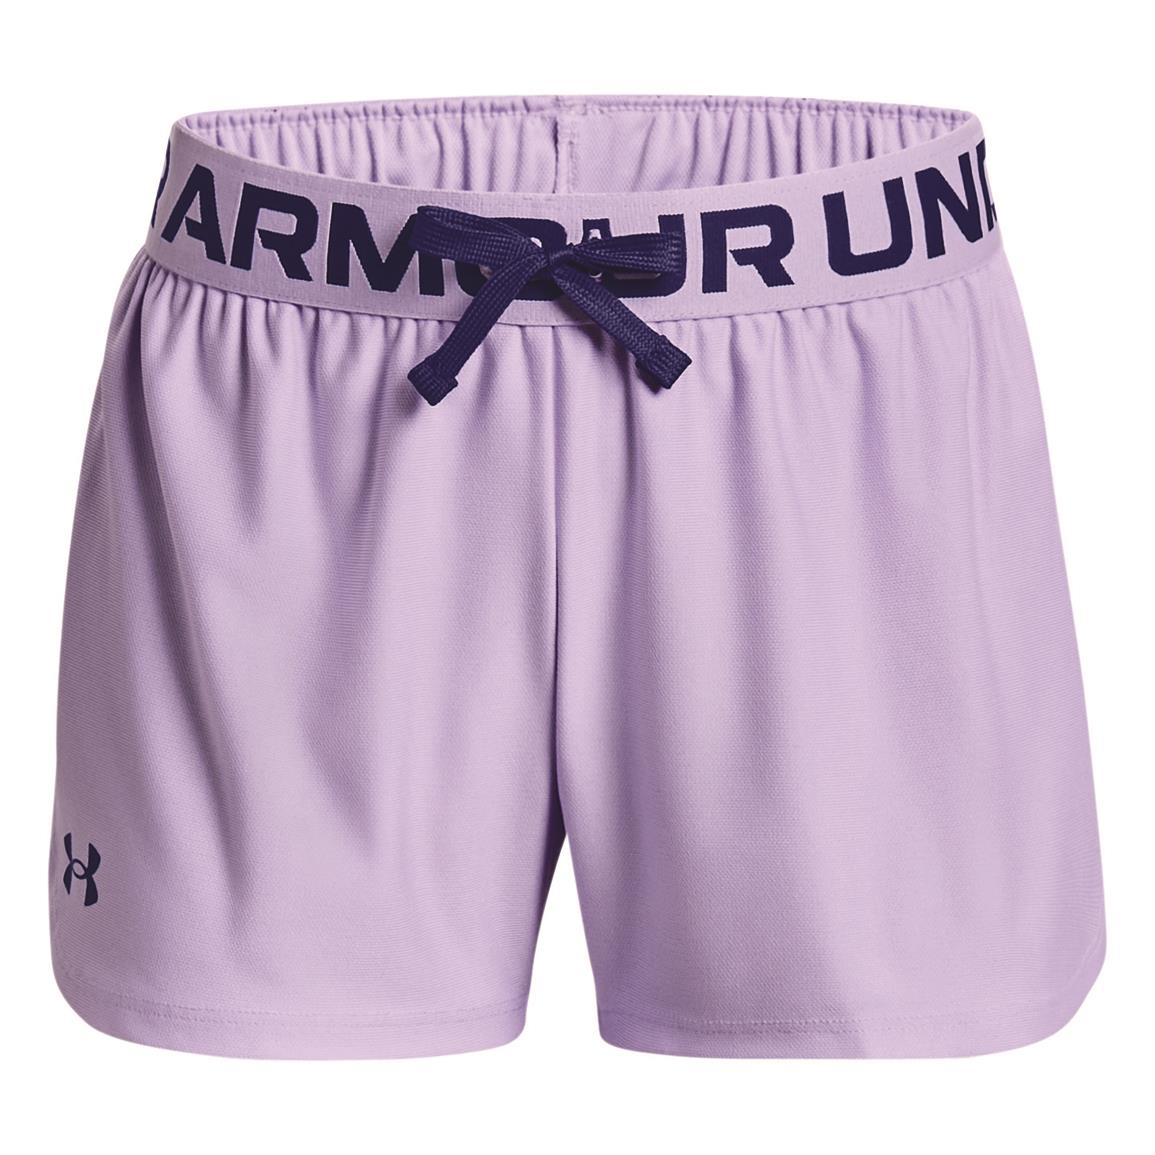 Under Armour Girls' Play Up Shorts, Nebula Purple/sonar Blue/sonar Blue